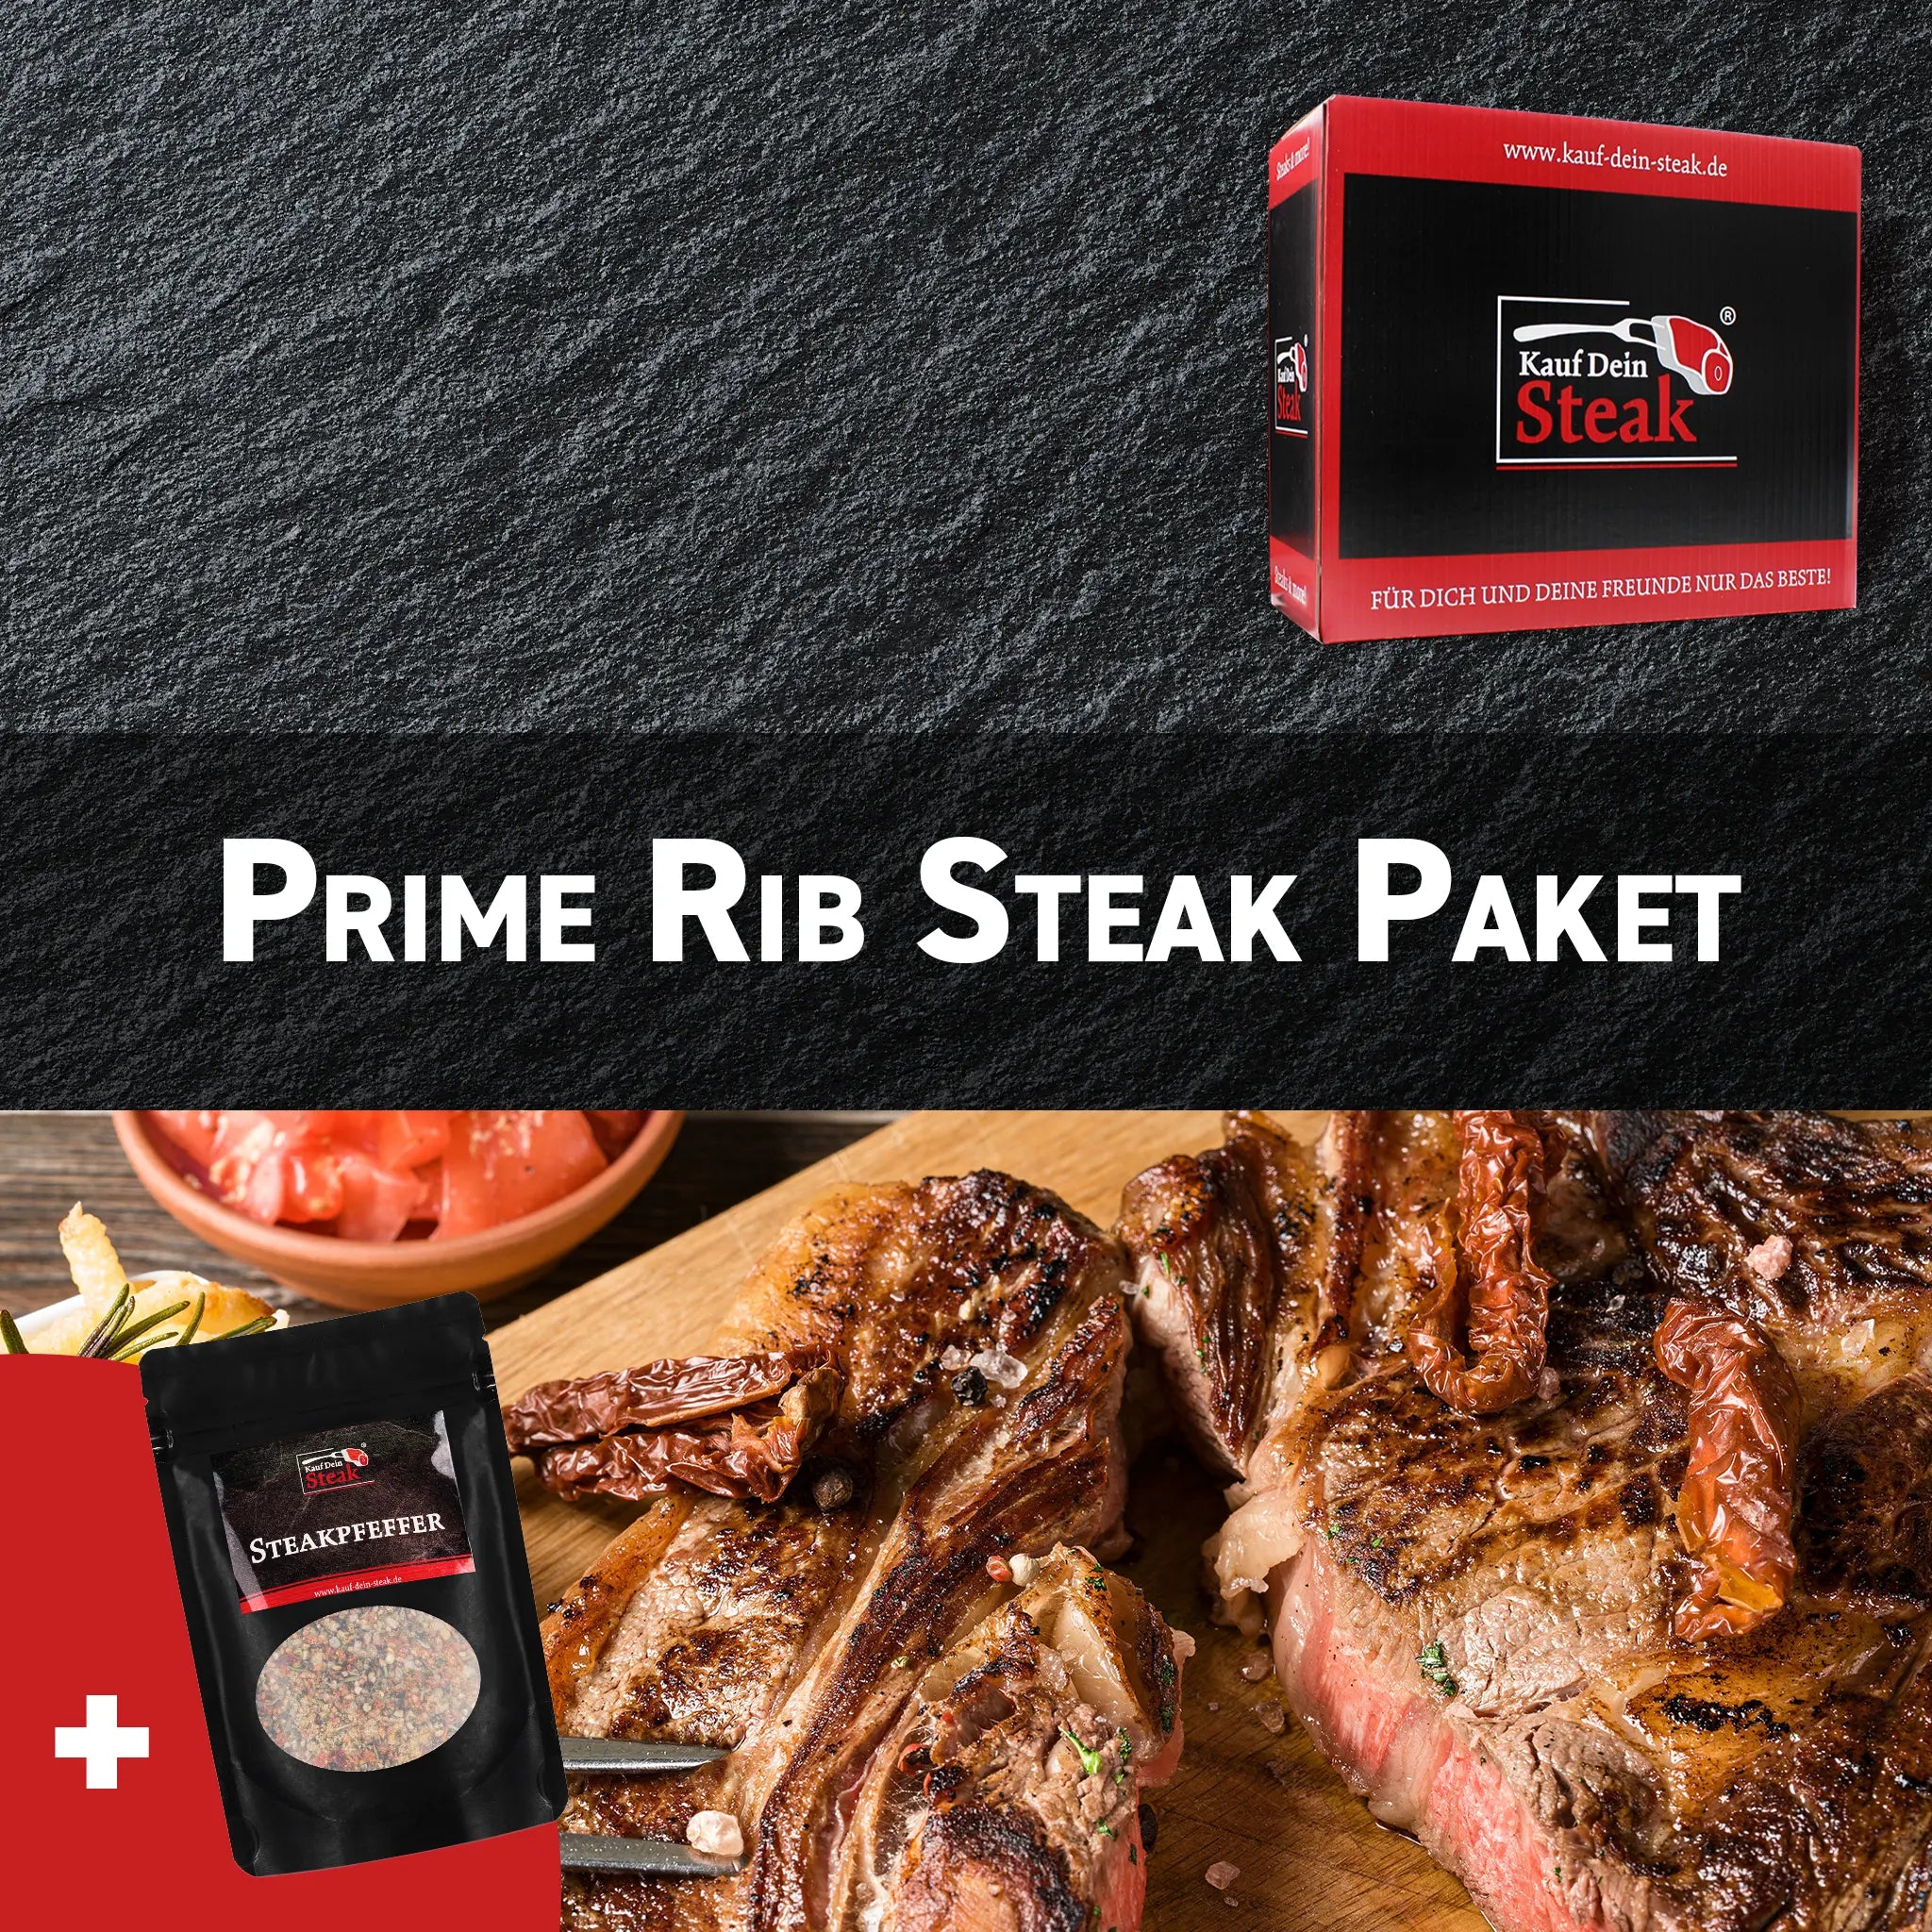 6 x Prime Rib Steak + Steakpfeffer